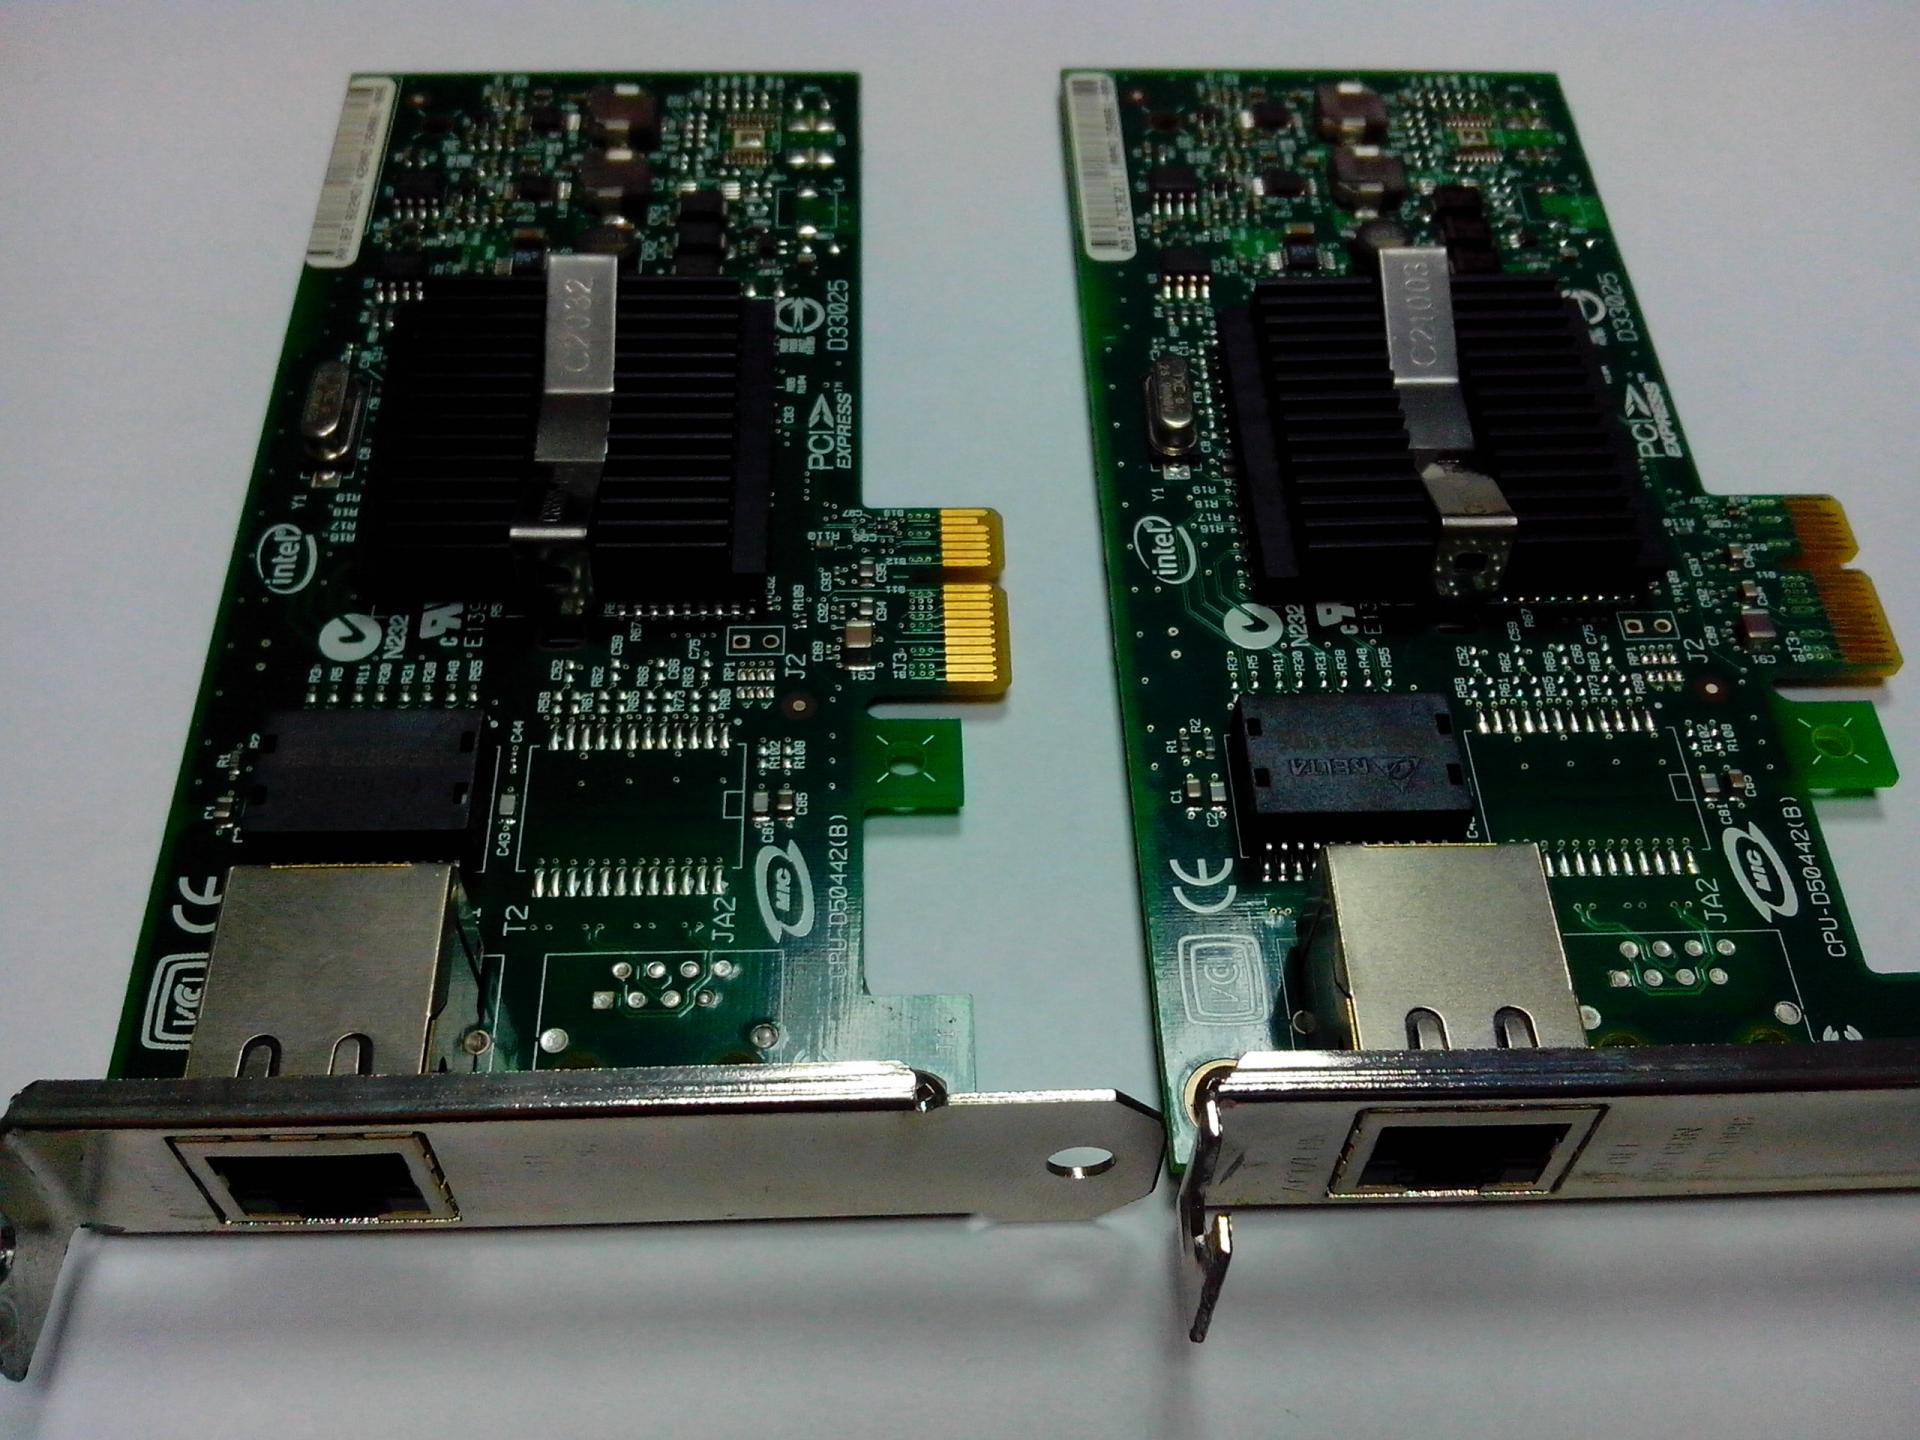 Intel cards. Expi9402pt. Expi9301. Intel Pro/1000 pt Quad. Pt9400.